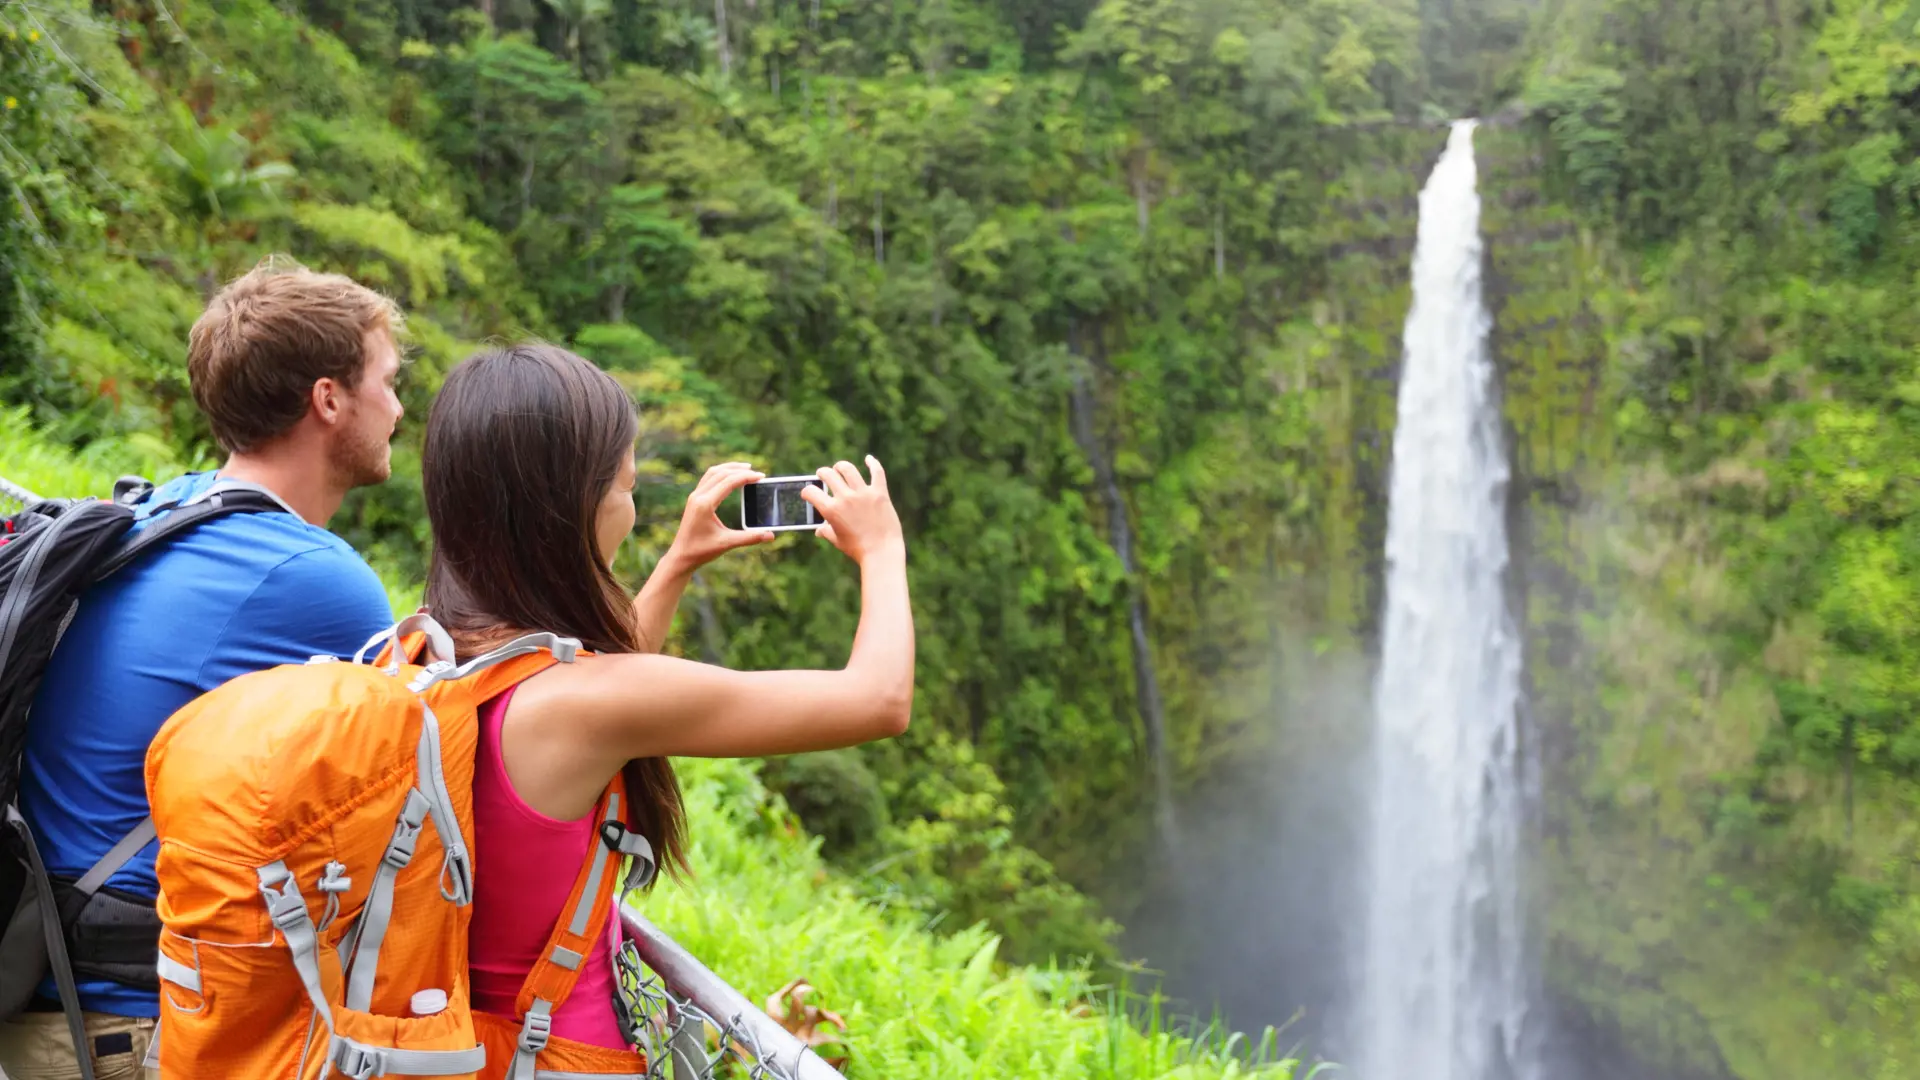 Couple tourists on Hawaii by waterfall. Tourist taking photo pictures of Akaka Falls waterfall on Hawaii, Big Island.jpg